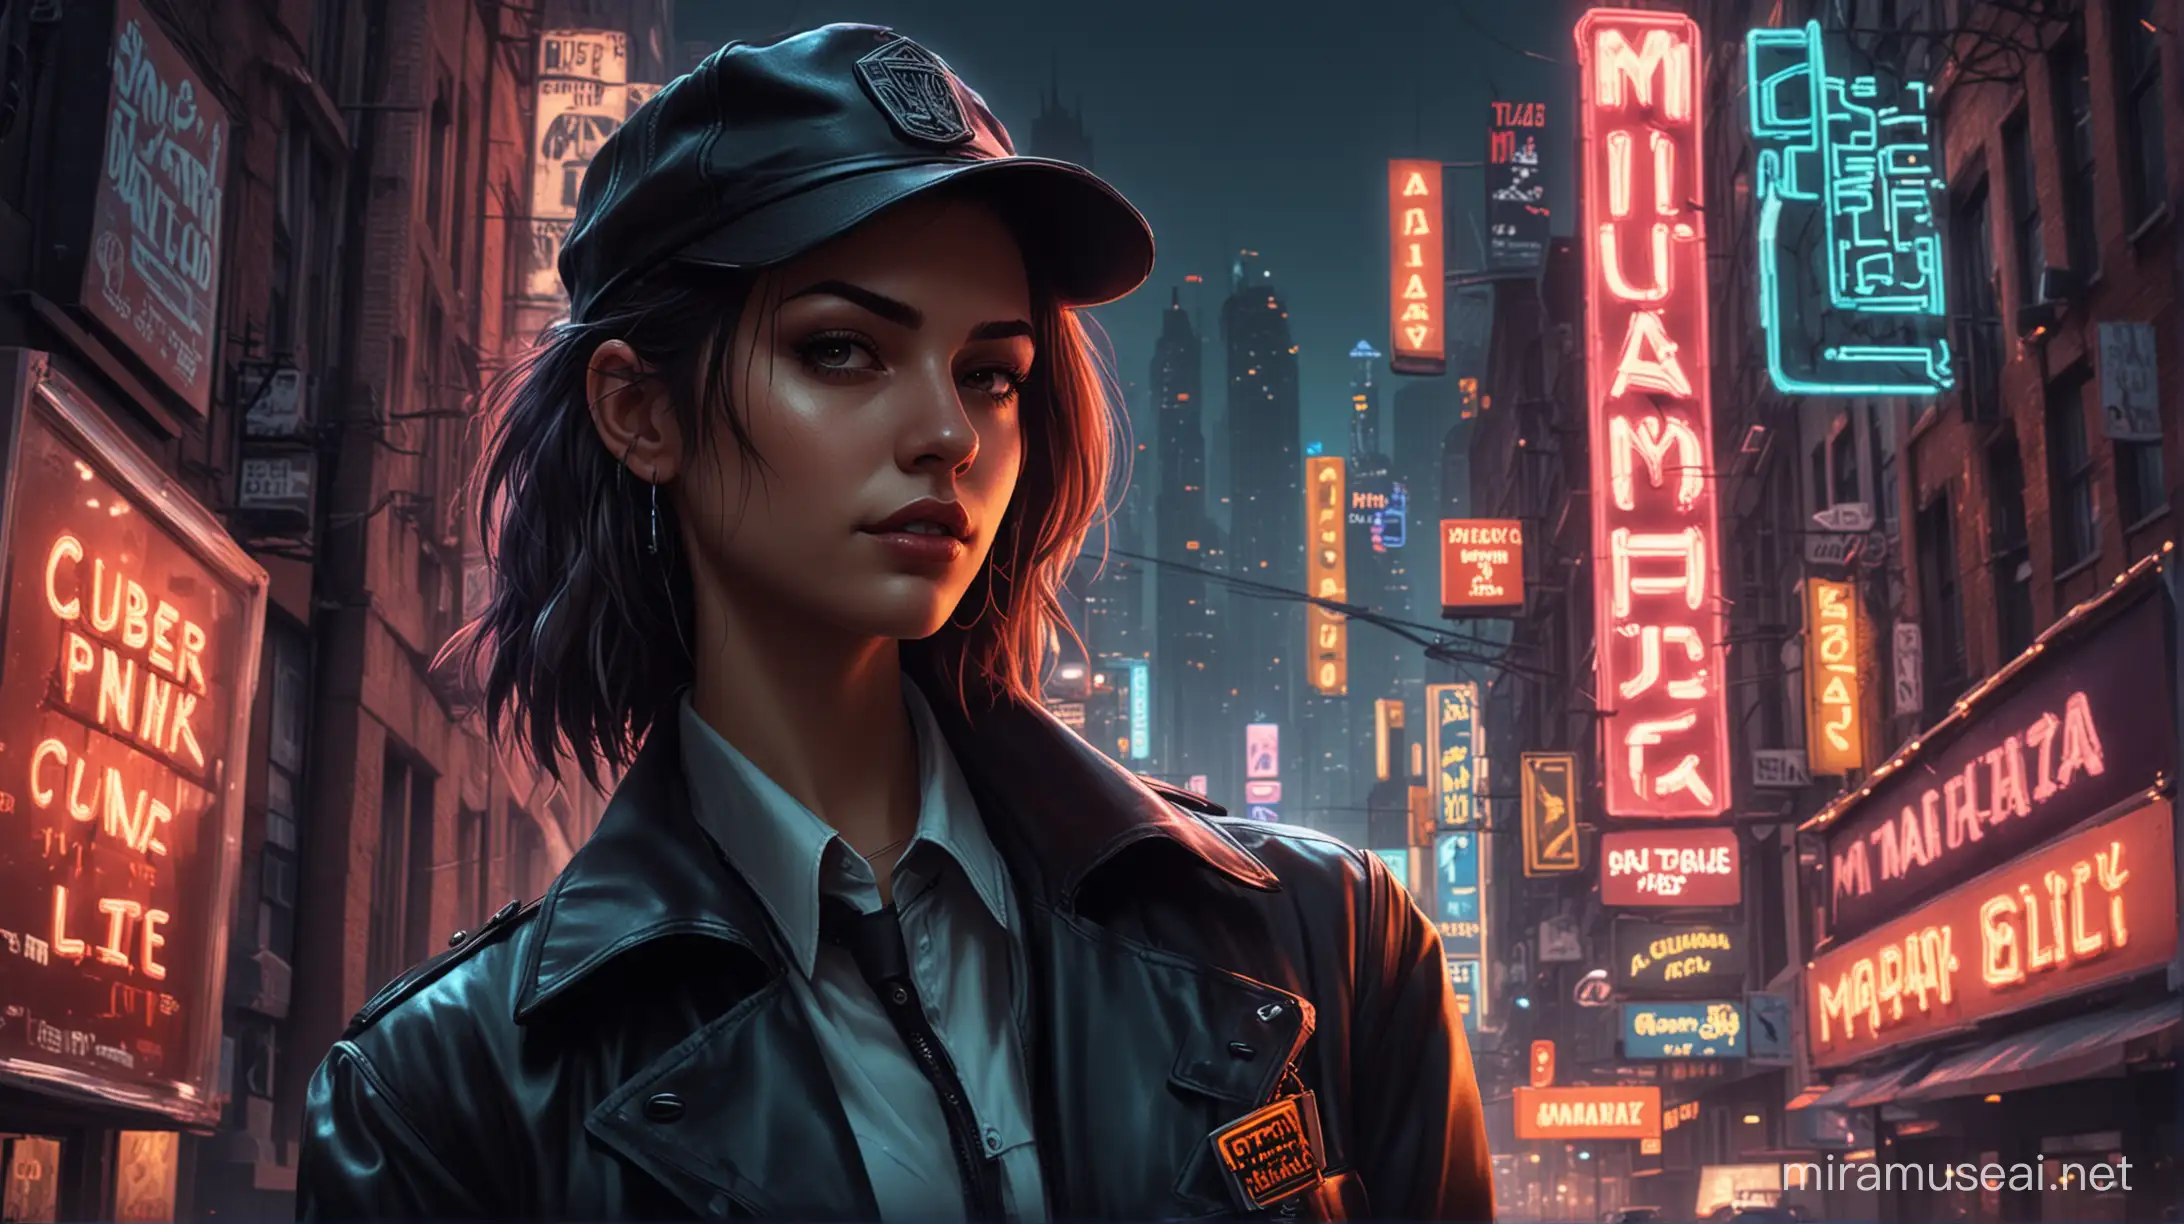 Female Investigator in Neonlit Cyberpunk City Investigating Mafia Elite